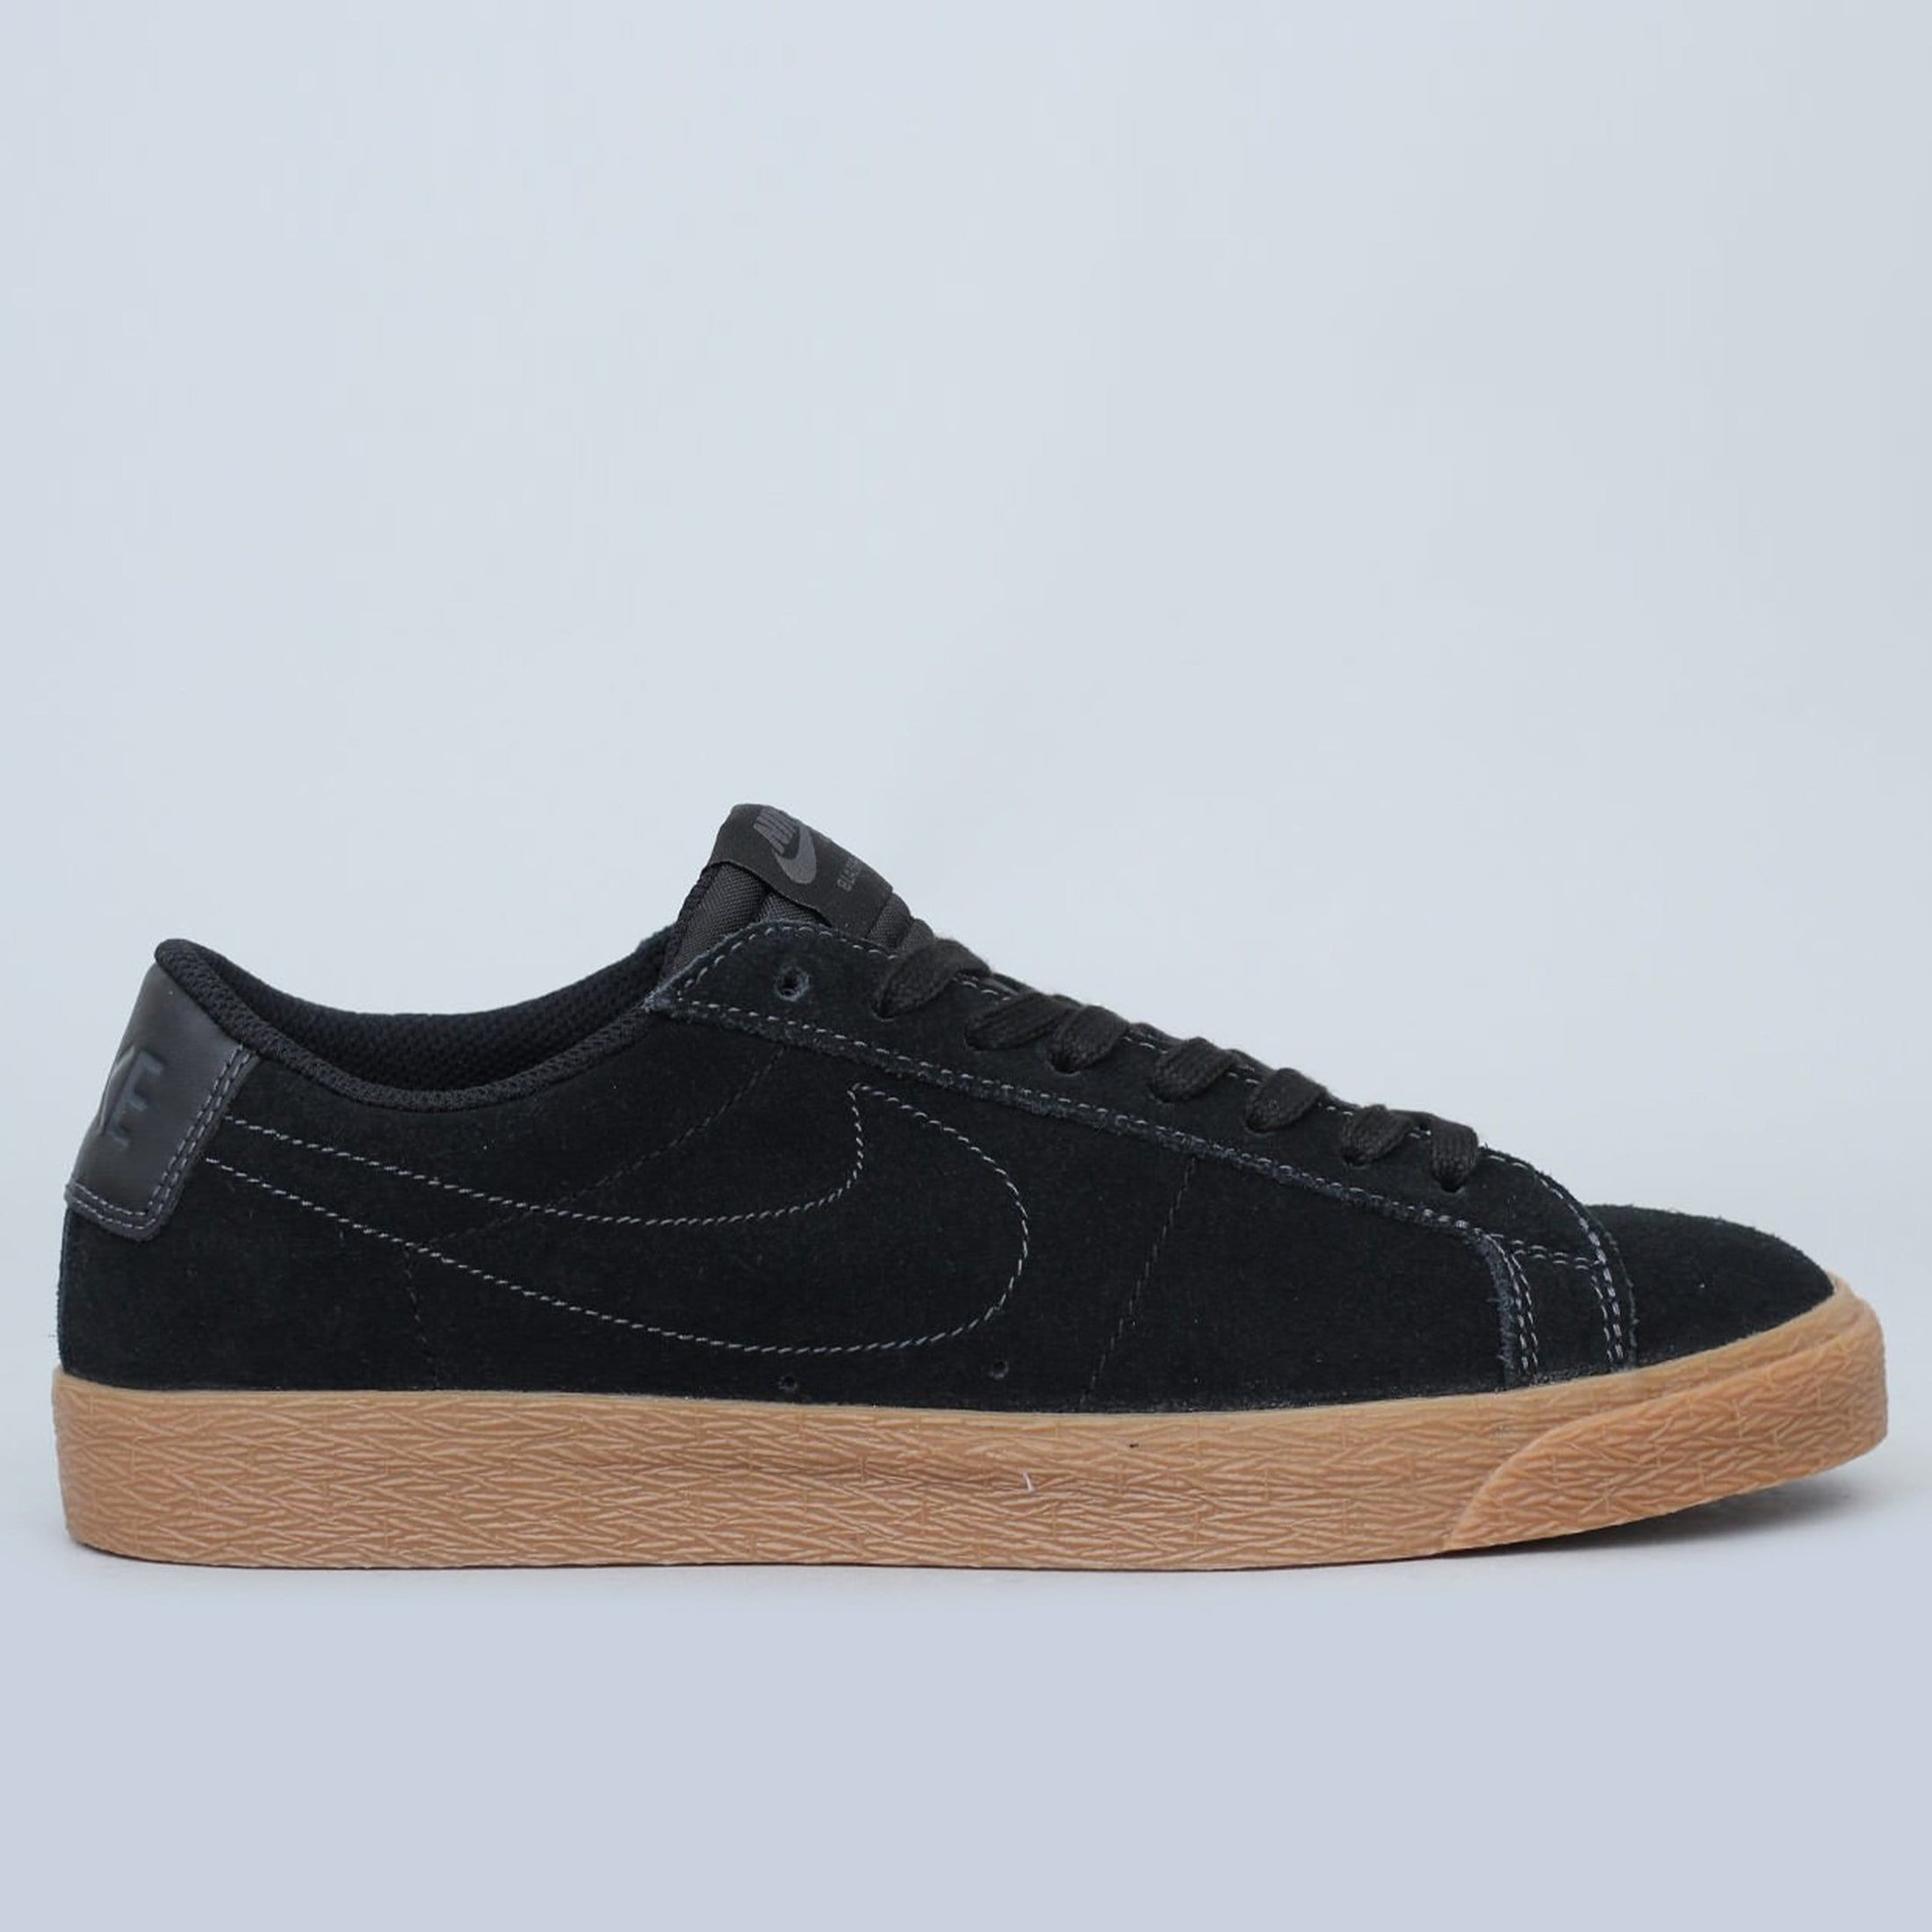 Nike SB Blazer Low Shoes Black / Black - Anthracite